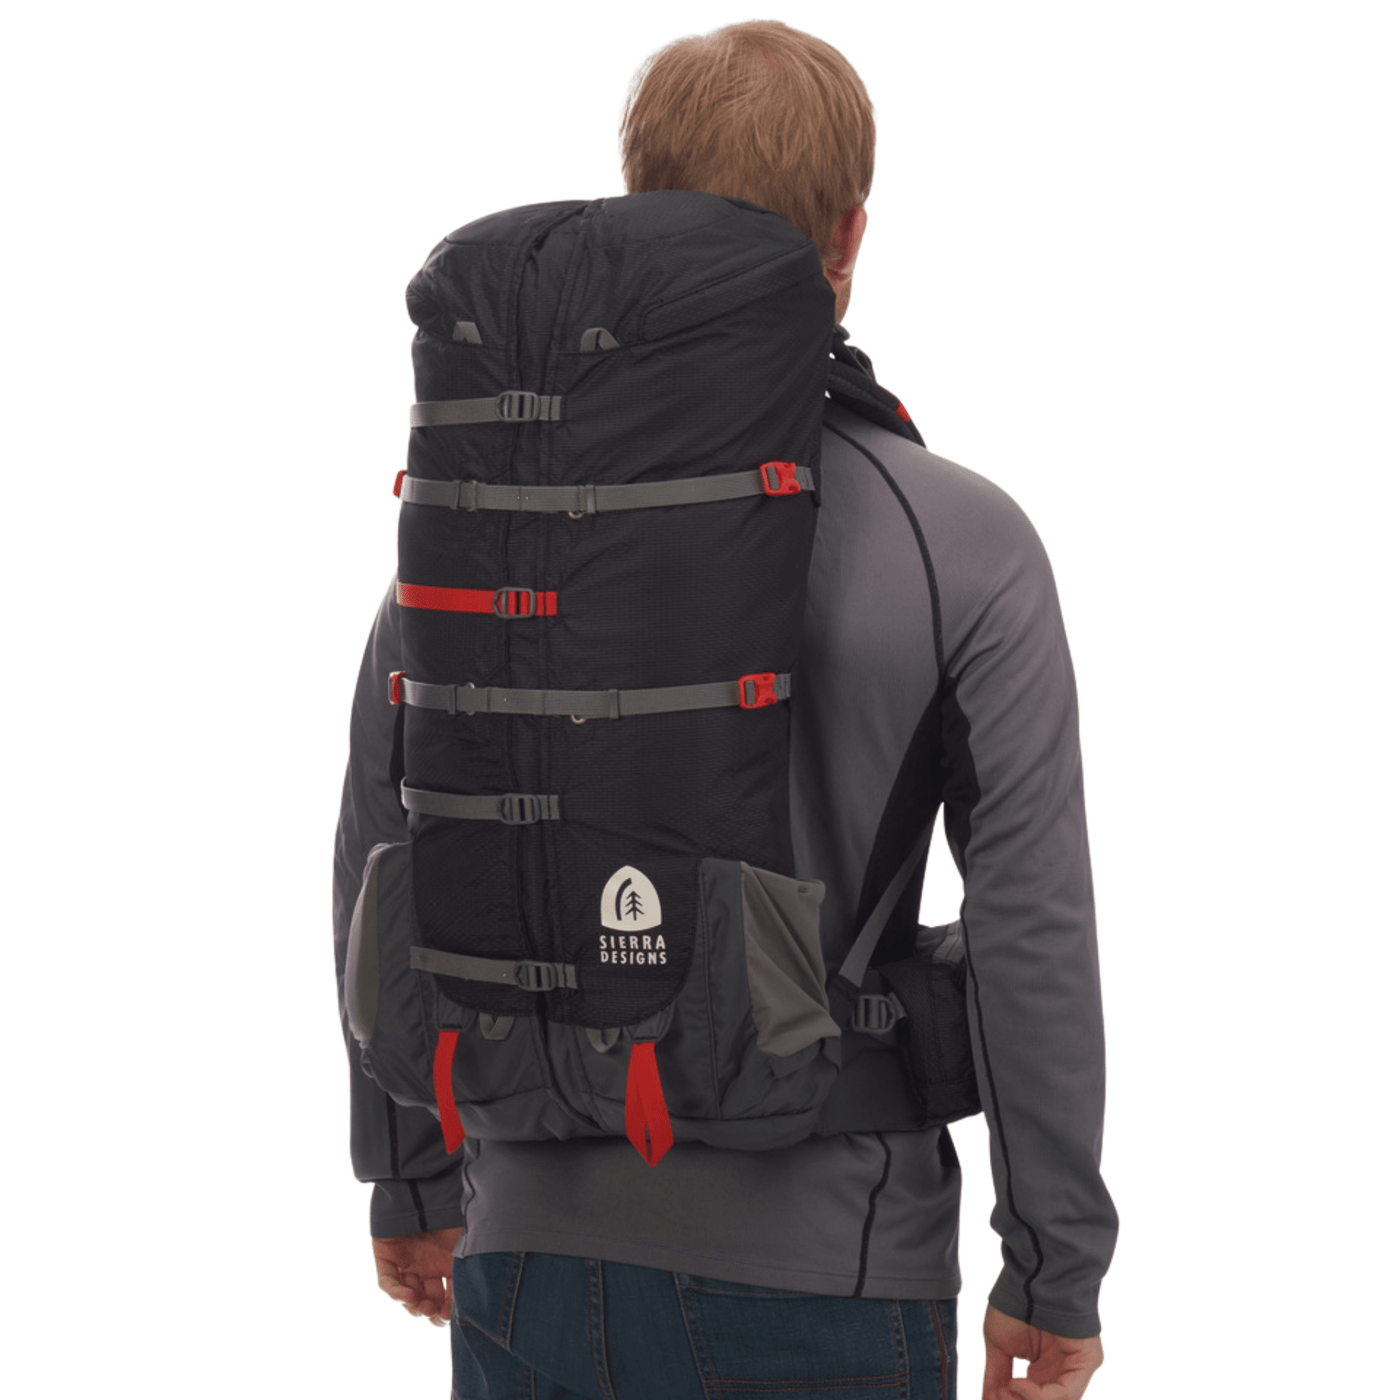 Sierra Designs Flex Capacitor Pack 25L-40L | Tramping & Hiking Backpacks | Further Faster Christchurch NZ #peat